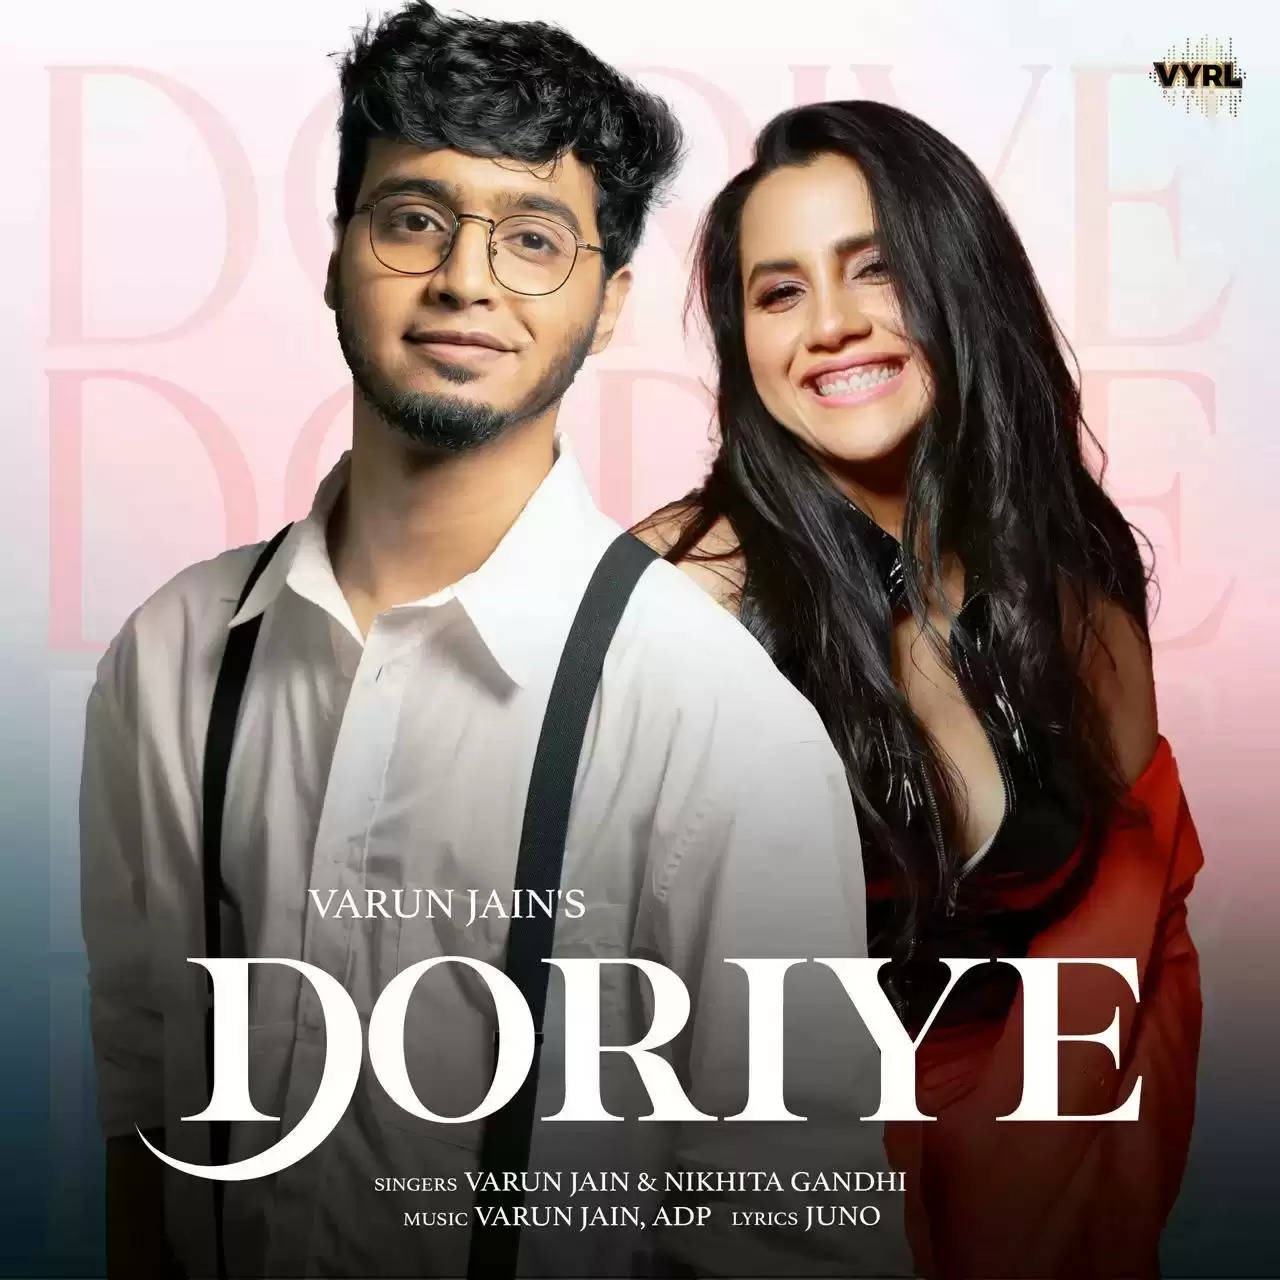 Tere Vaaste fame, Varun Jain drops new single “Doriye” featuring Nikhita Gandhi